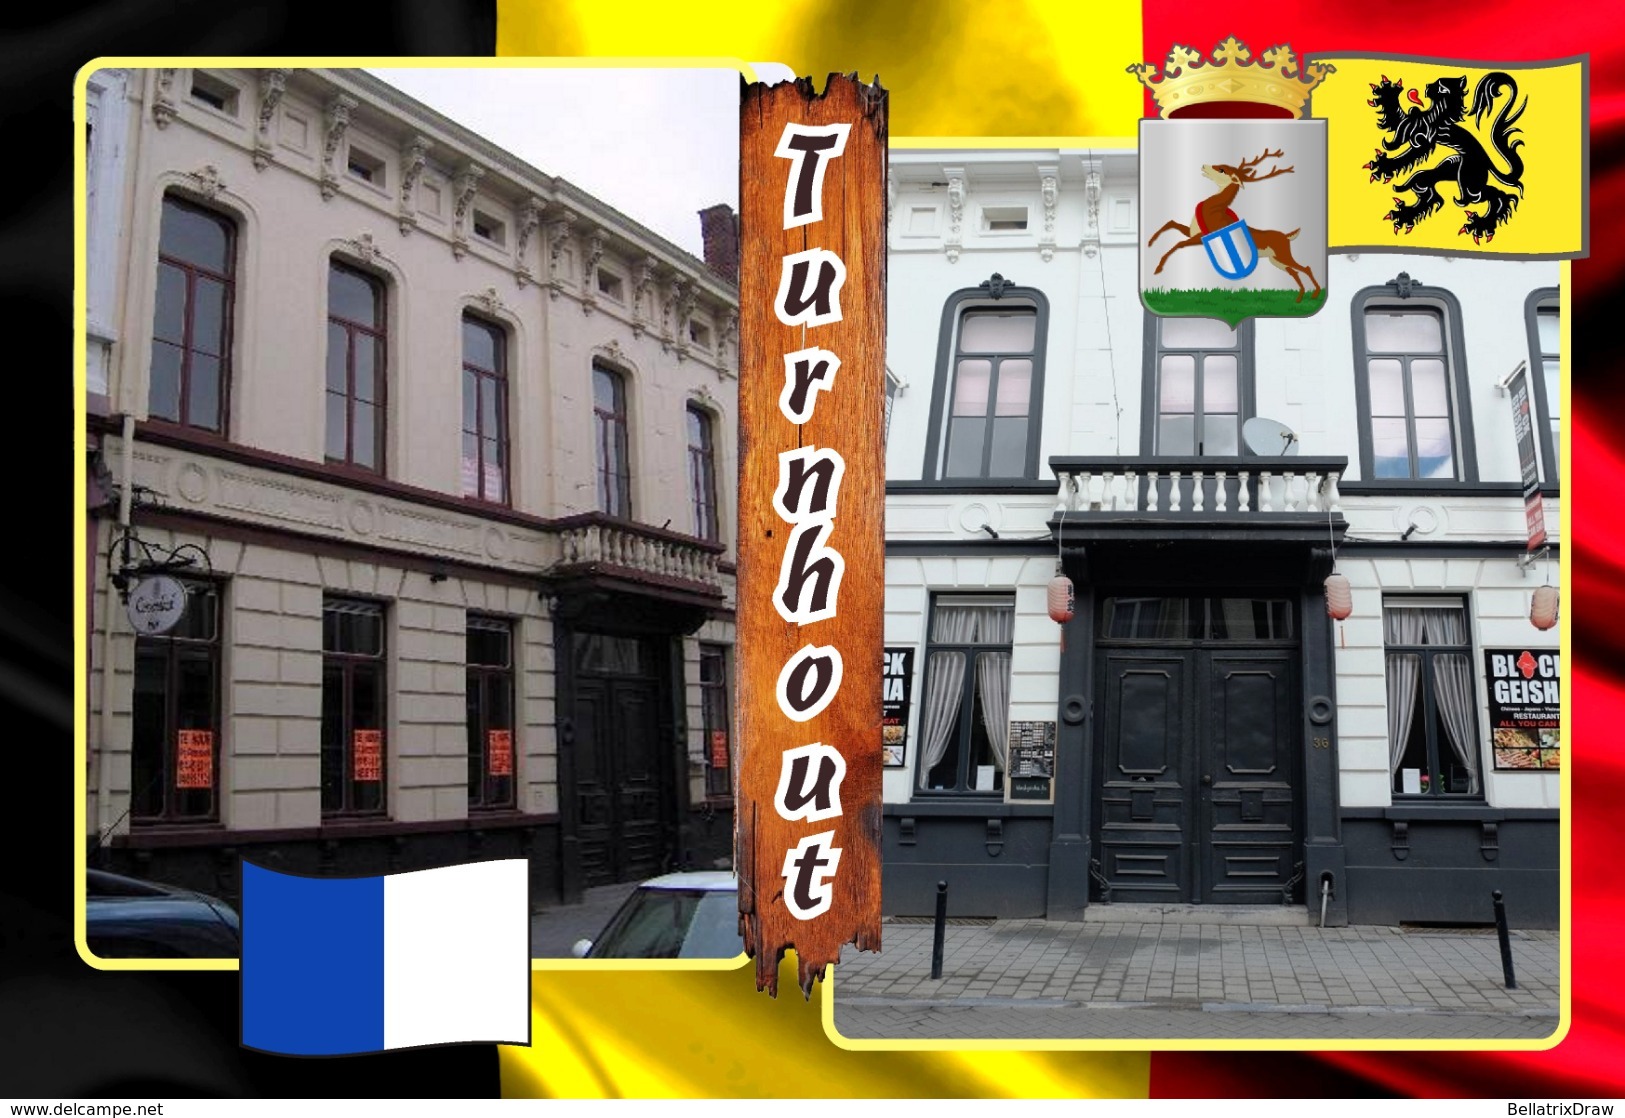 Postcards, REPRODUCTION, Municipalities of Belgium, Turnhout duplex XI - 48 pcs.(498 - 545)